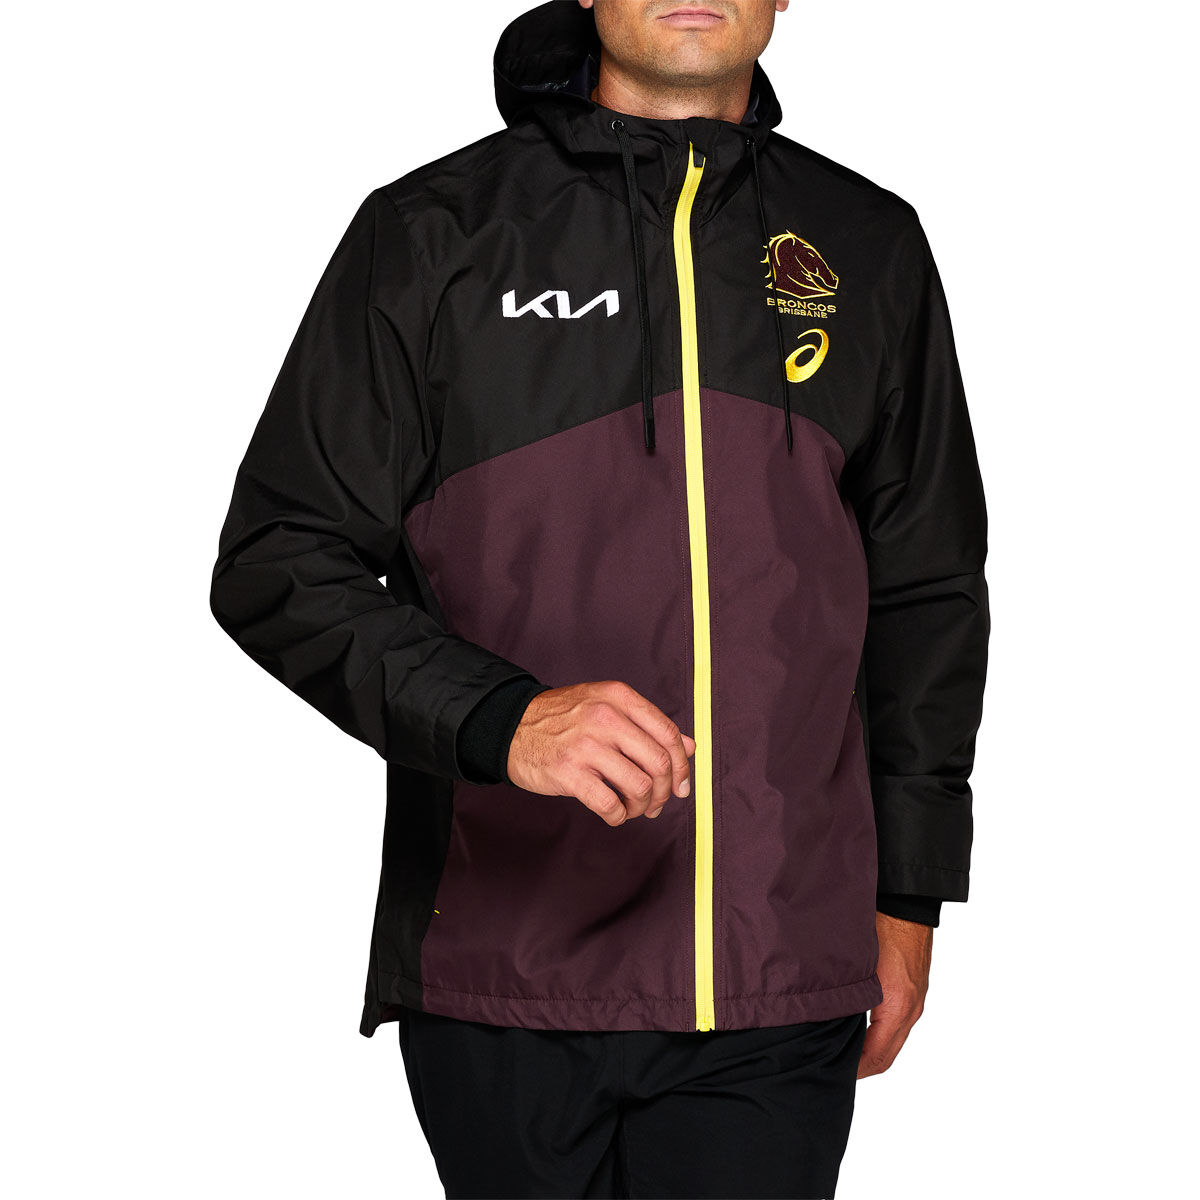 NRL 2020 Wet Weather Jacket Full Zip Warm Travel Coat Brisbane Broncos 